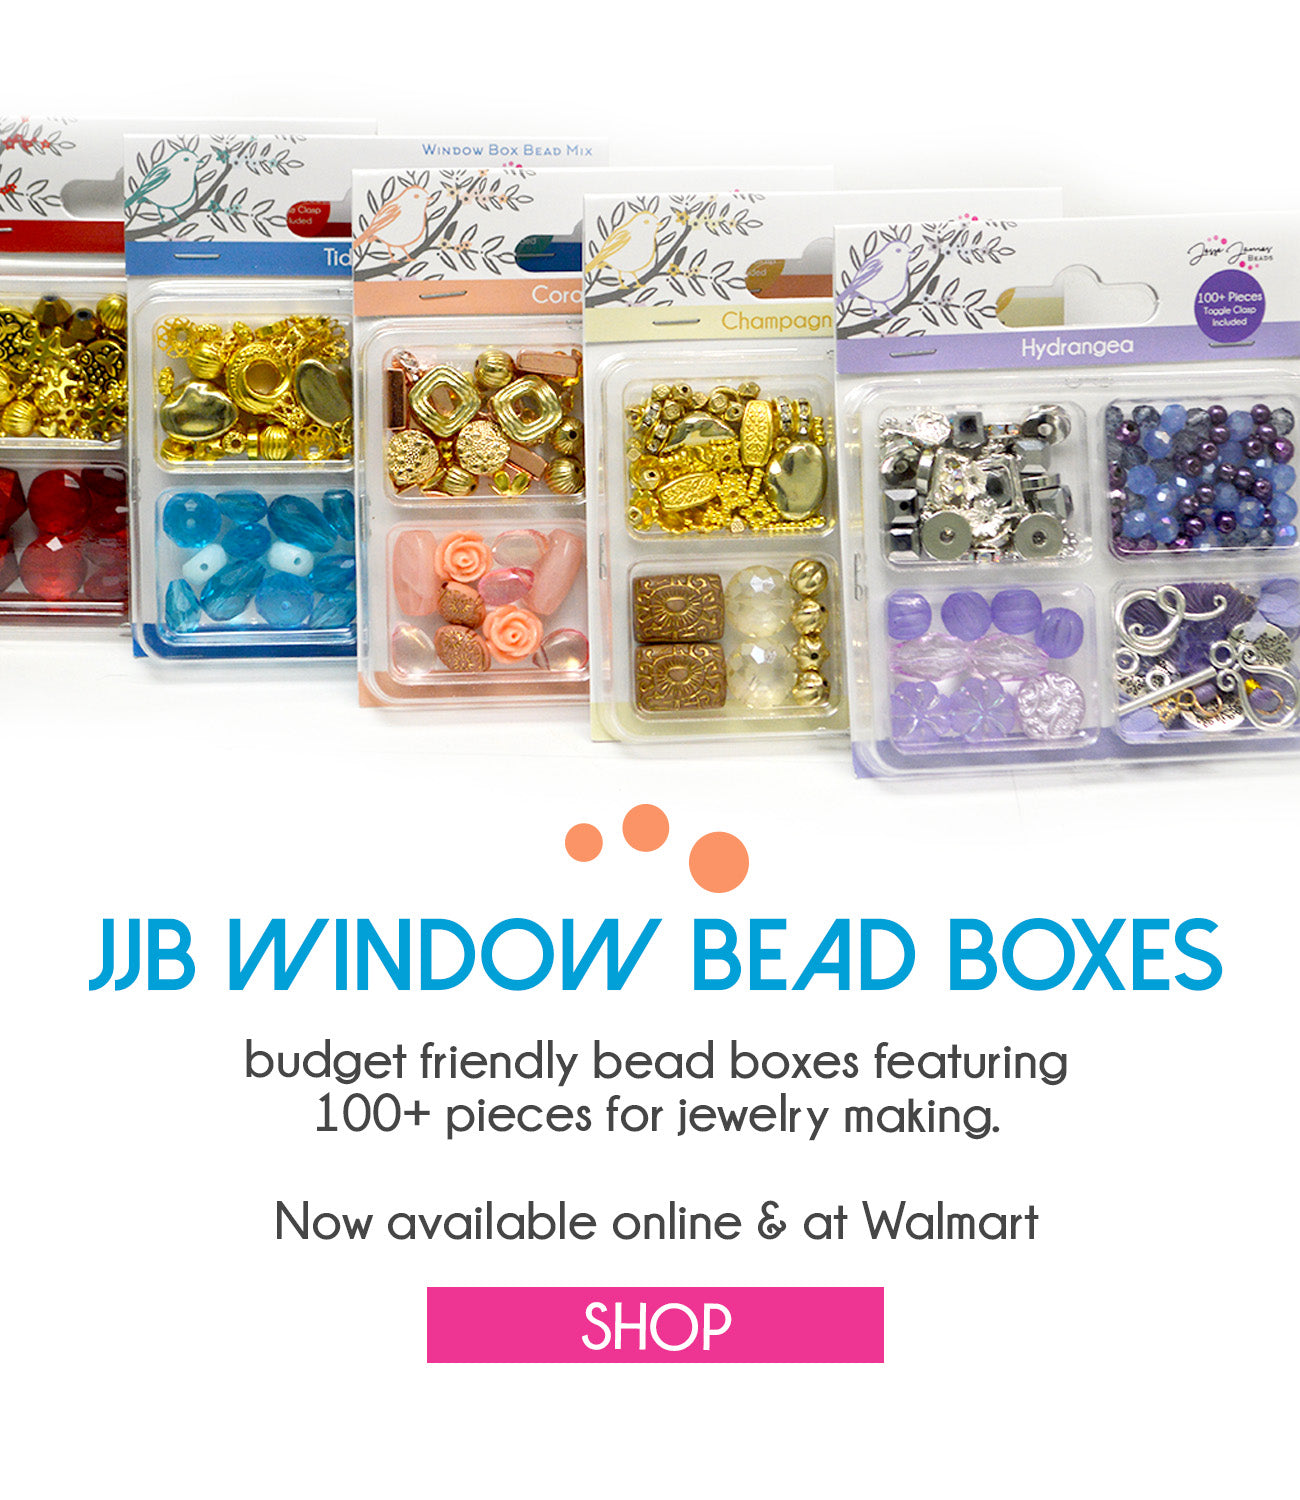 The Beadery Bead Extravaganza Box Soft Pastels